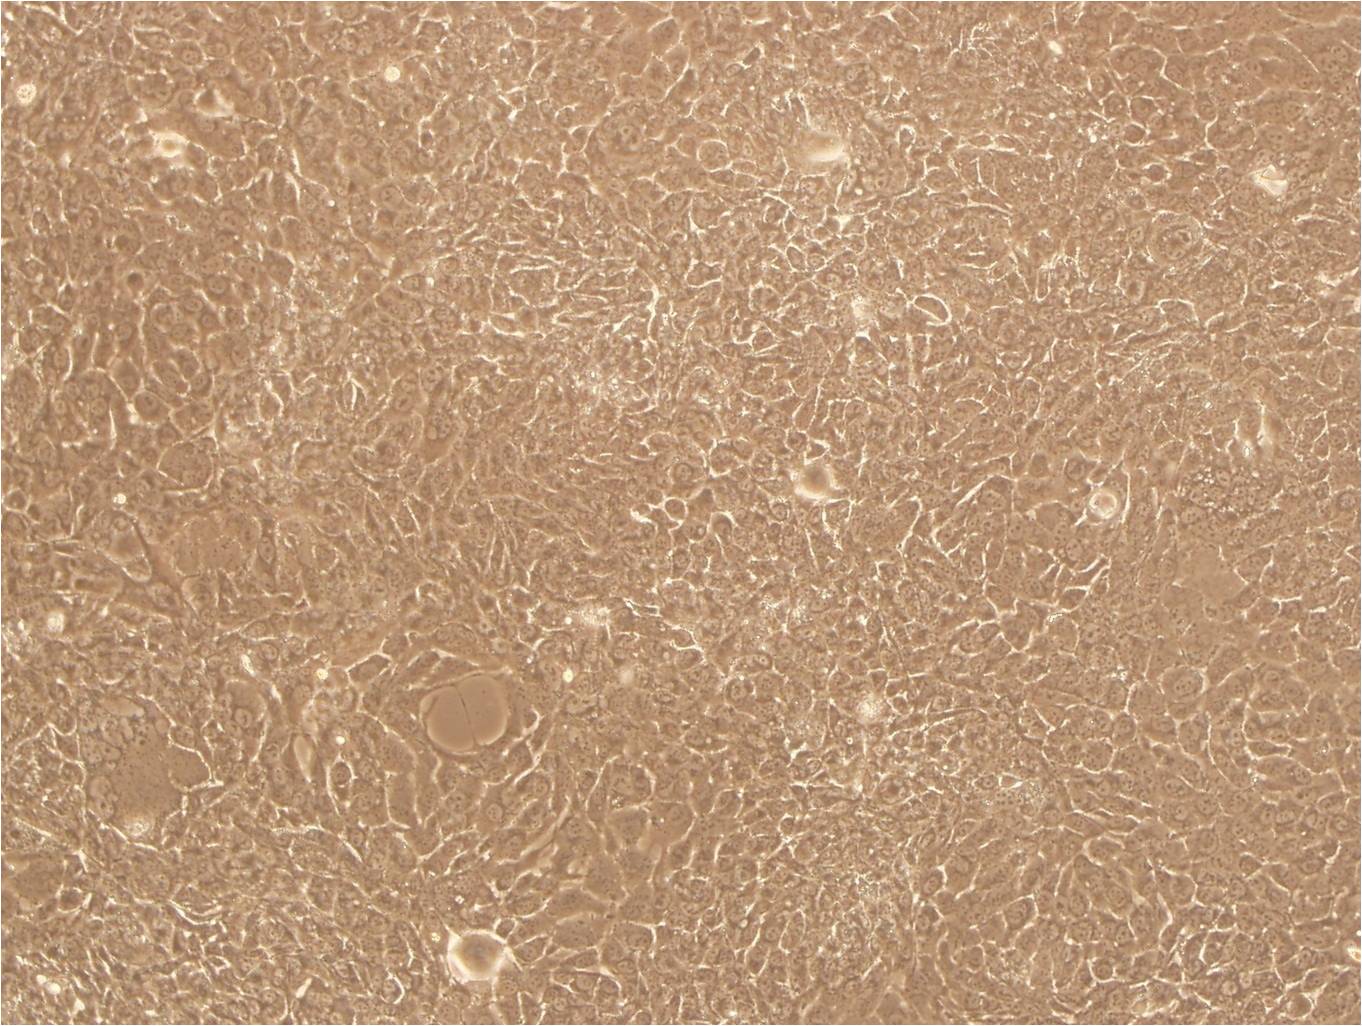 SNU-869 Cells(赠送Str鉴定报告)|人胆管癌细胞,SNU-869 Cells